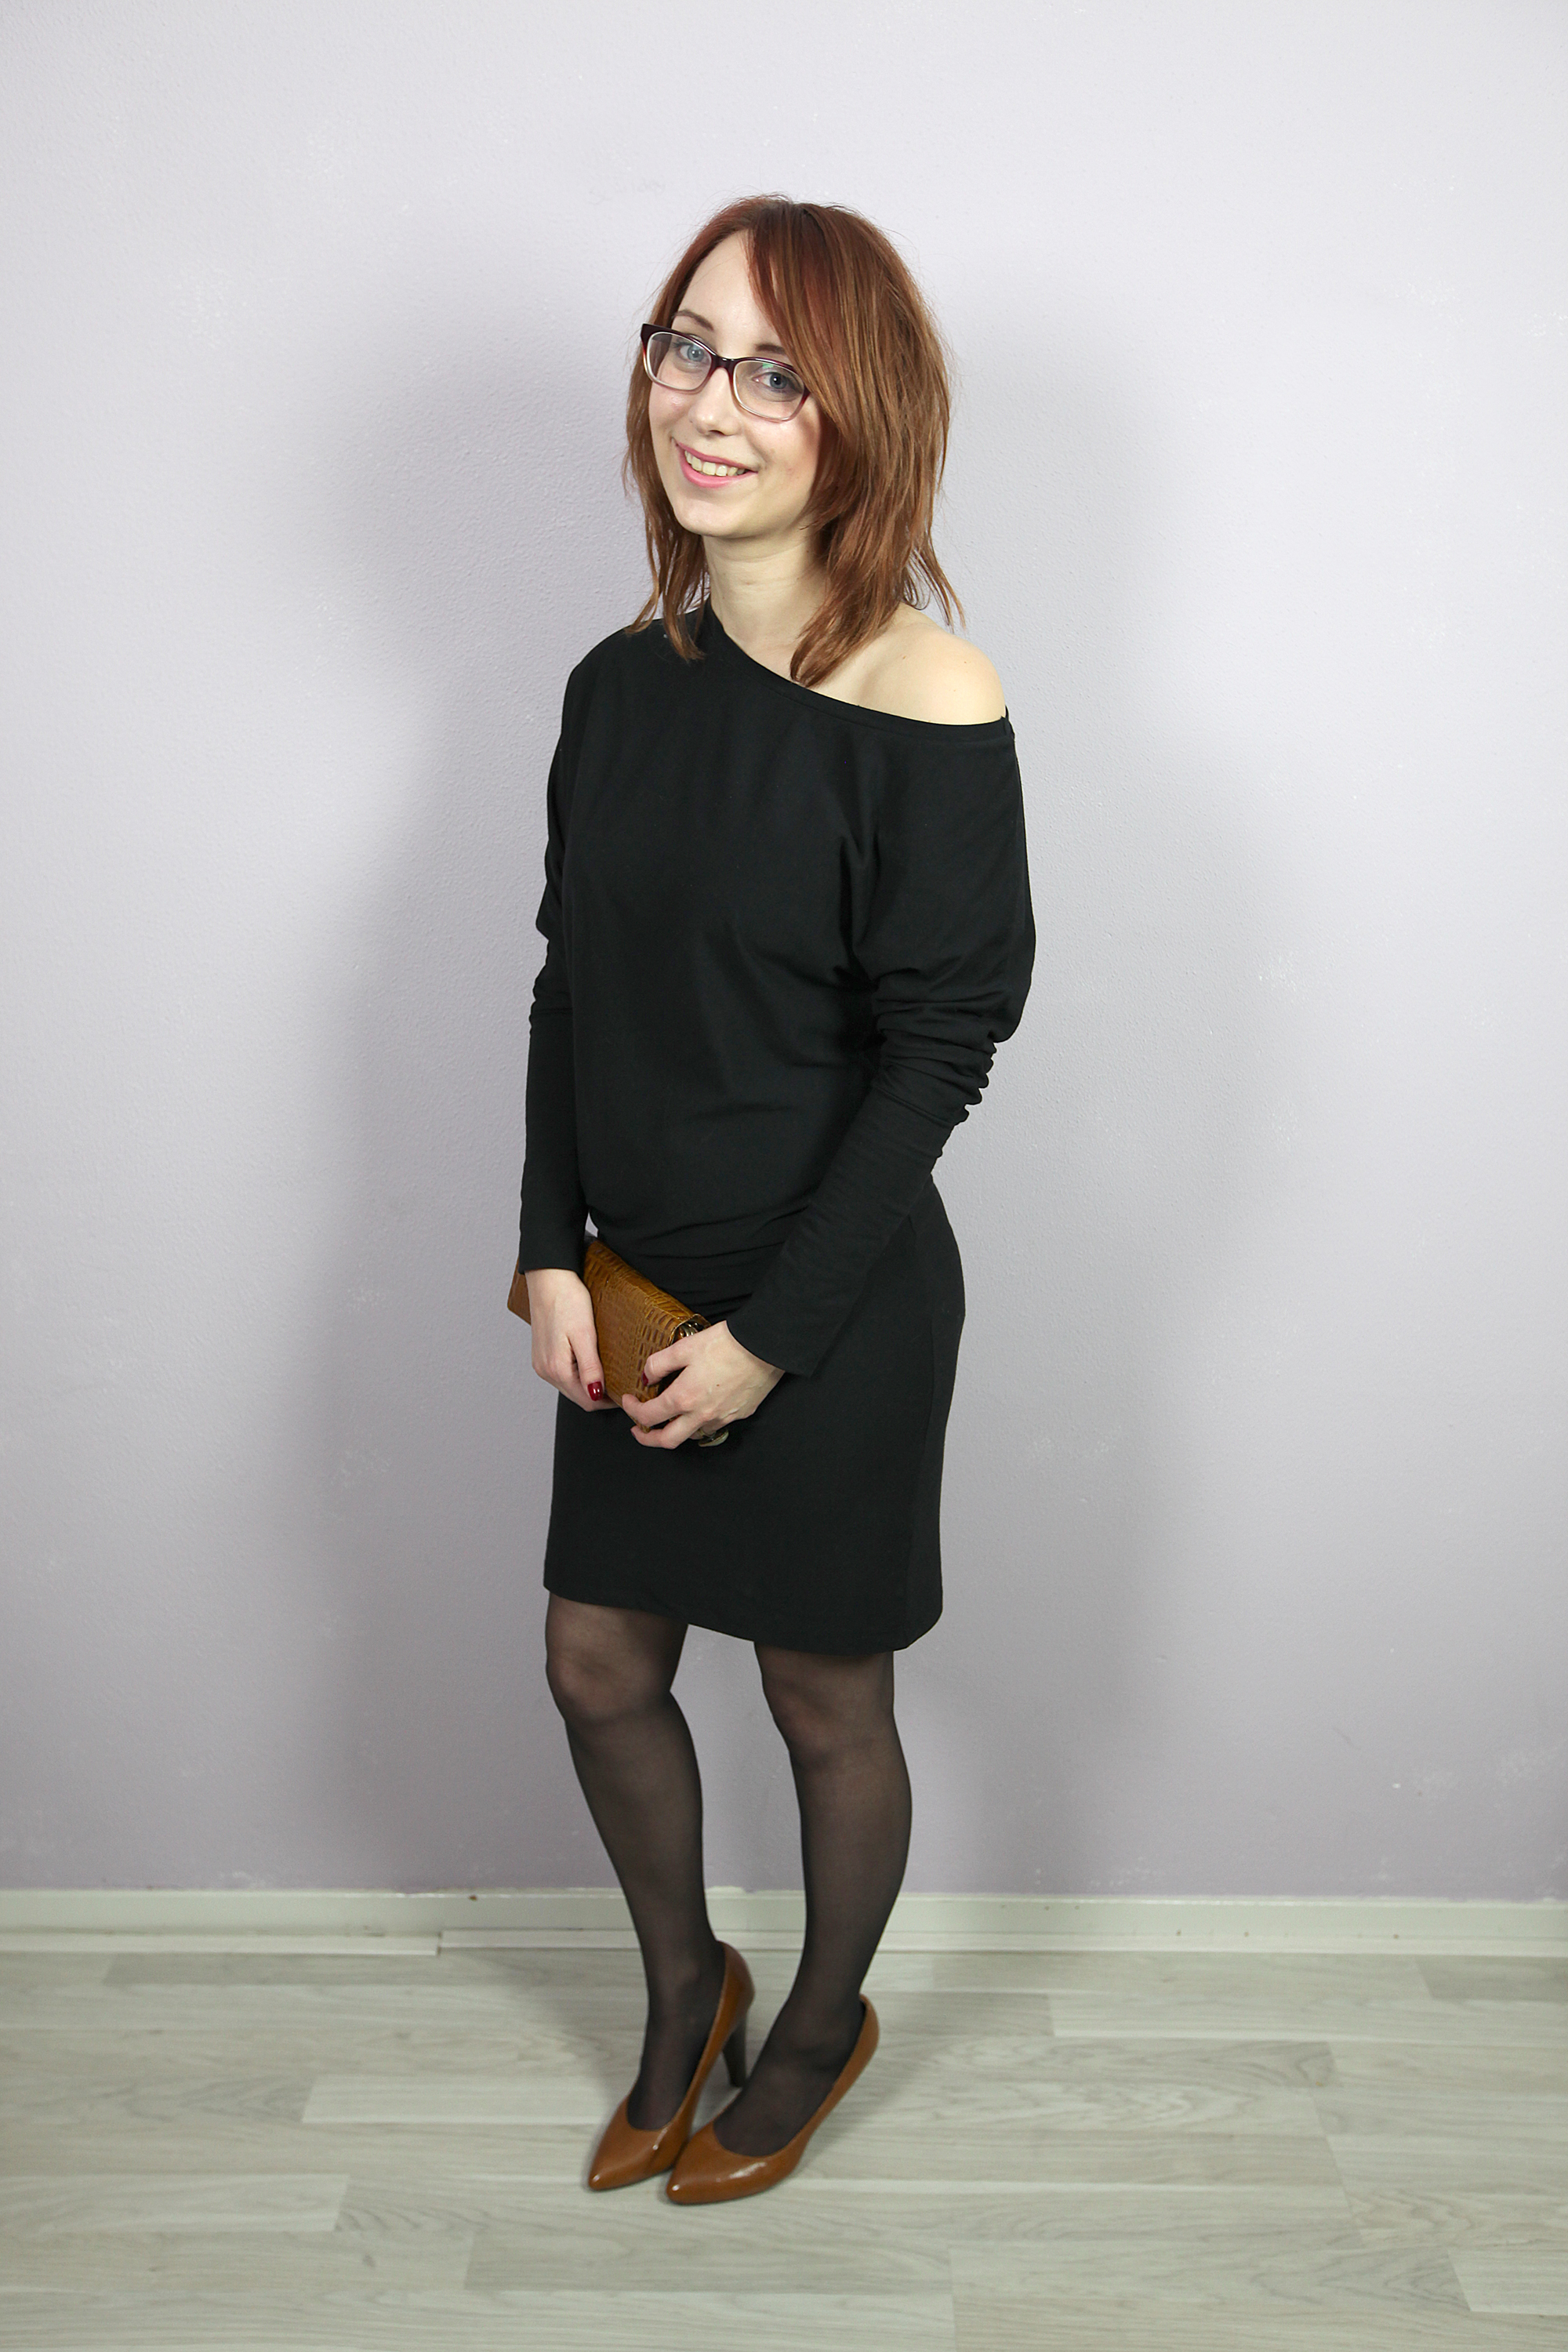 Dag pit Beschrijven Outfit: De perfecte zwarte jurk is van bamboe - vintageandbeauty.com